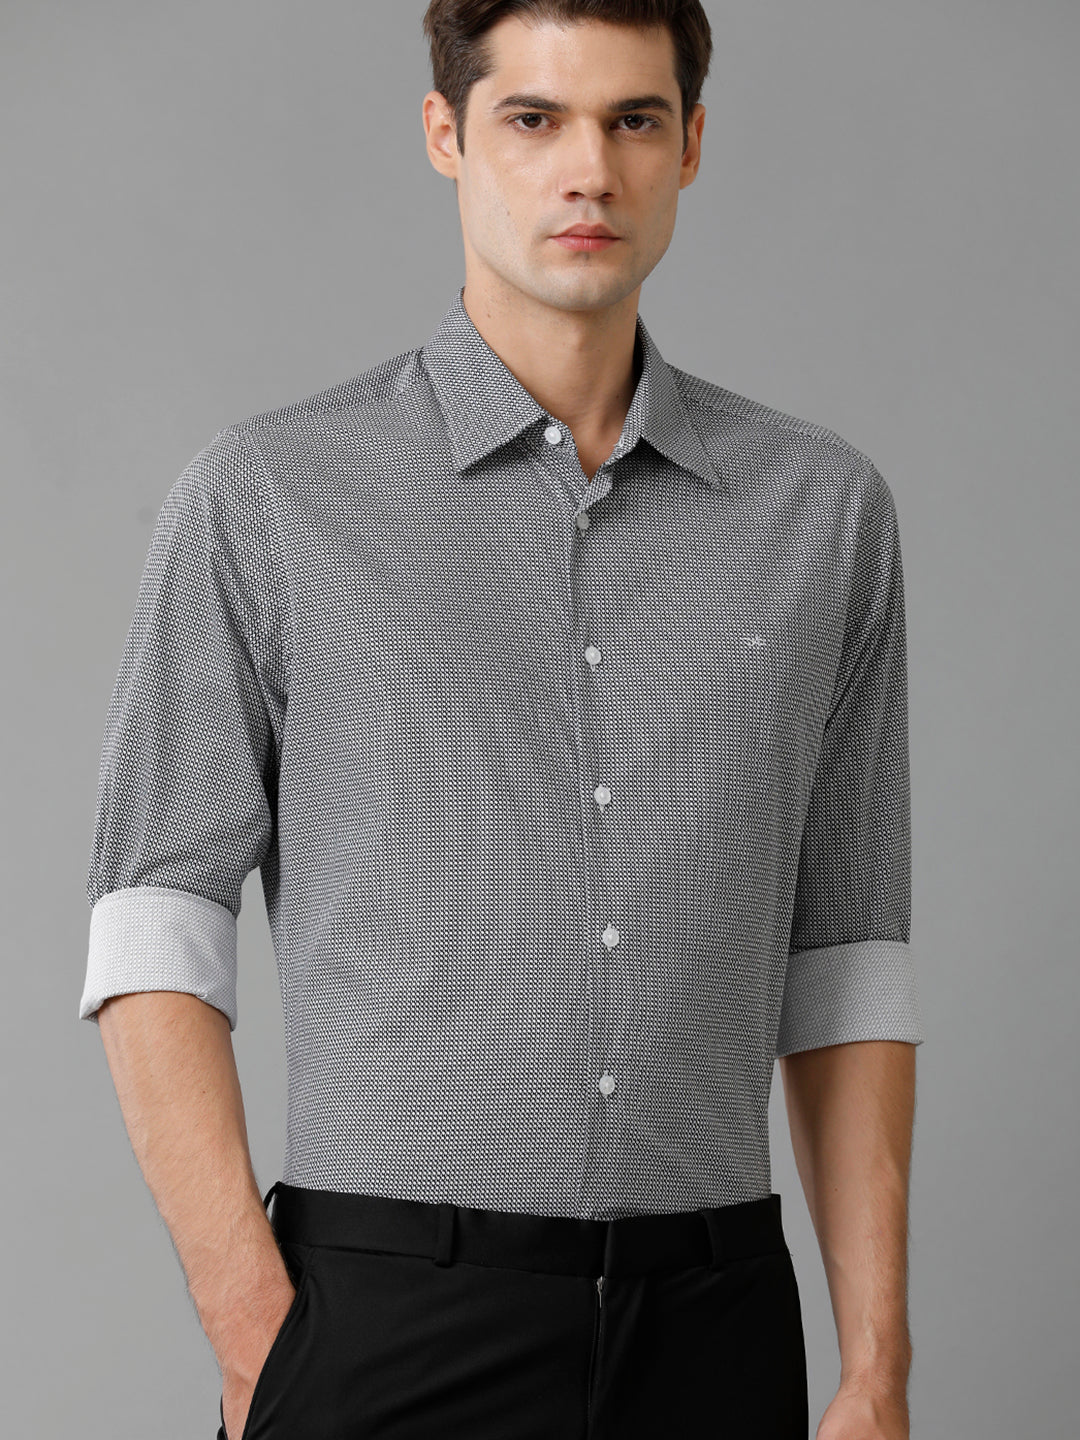 Aldeno Mens Slim Fit Black/White Geometric Print Casual Cotton Stretch Shirt (PIBAK)